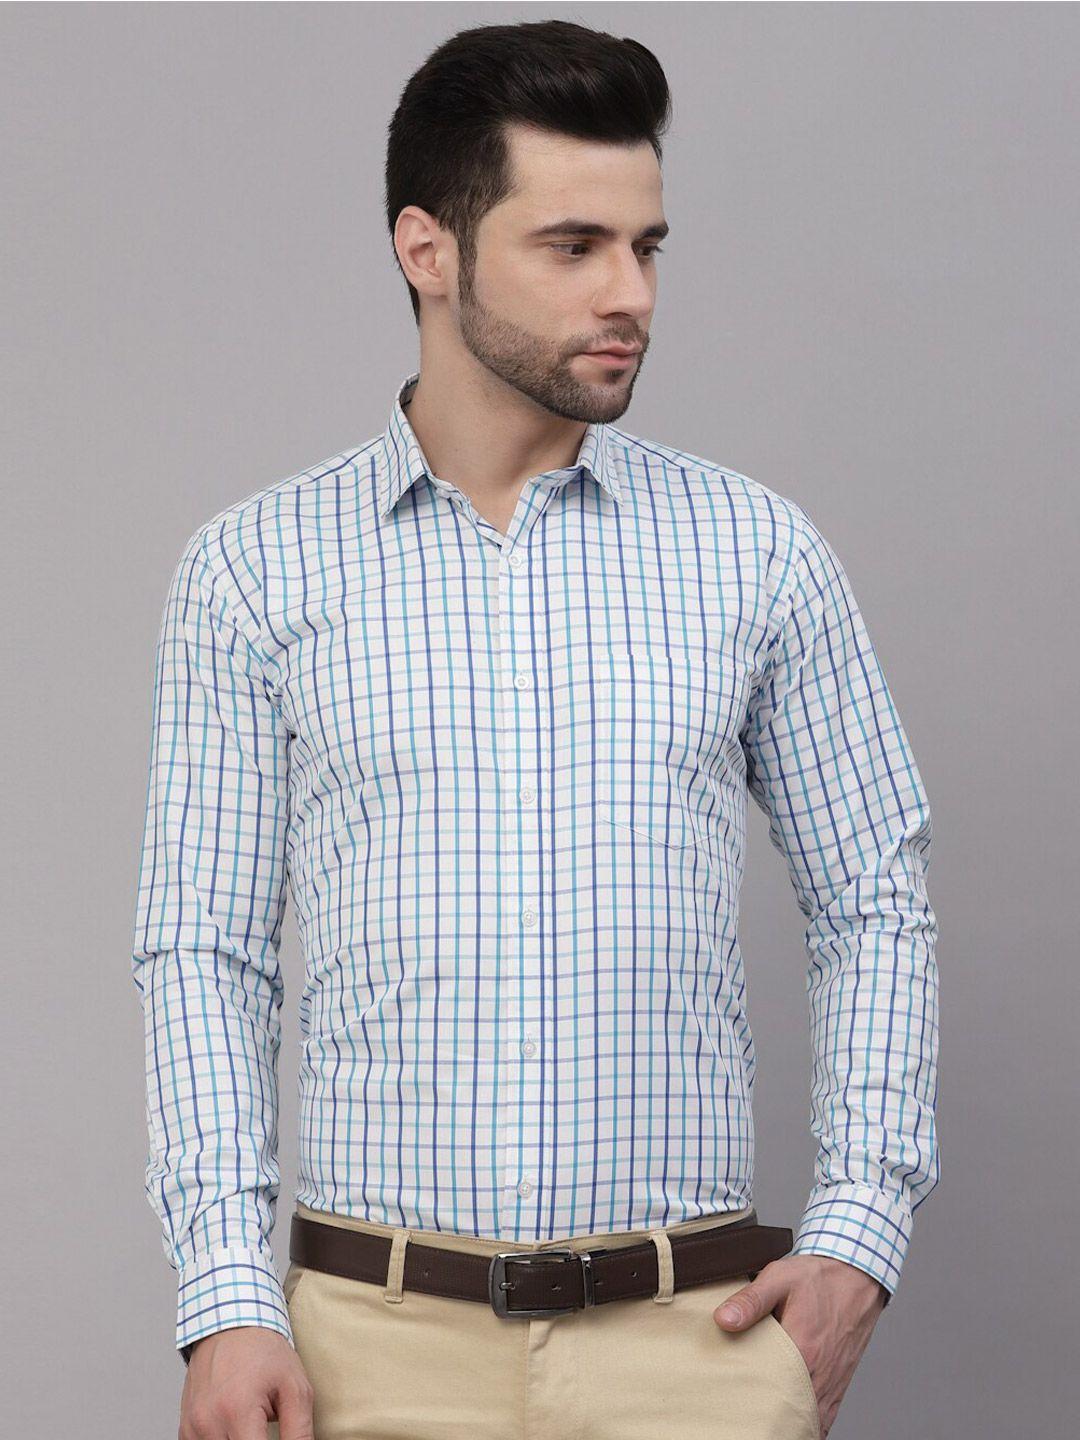 style-quotient-smart-tartan-checks-checked-formal-shirt